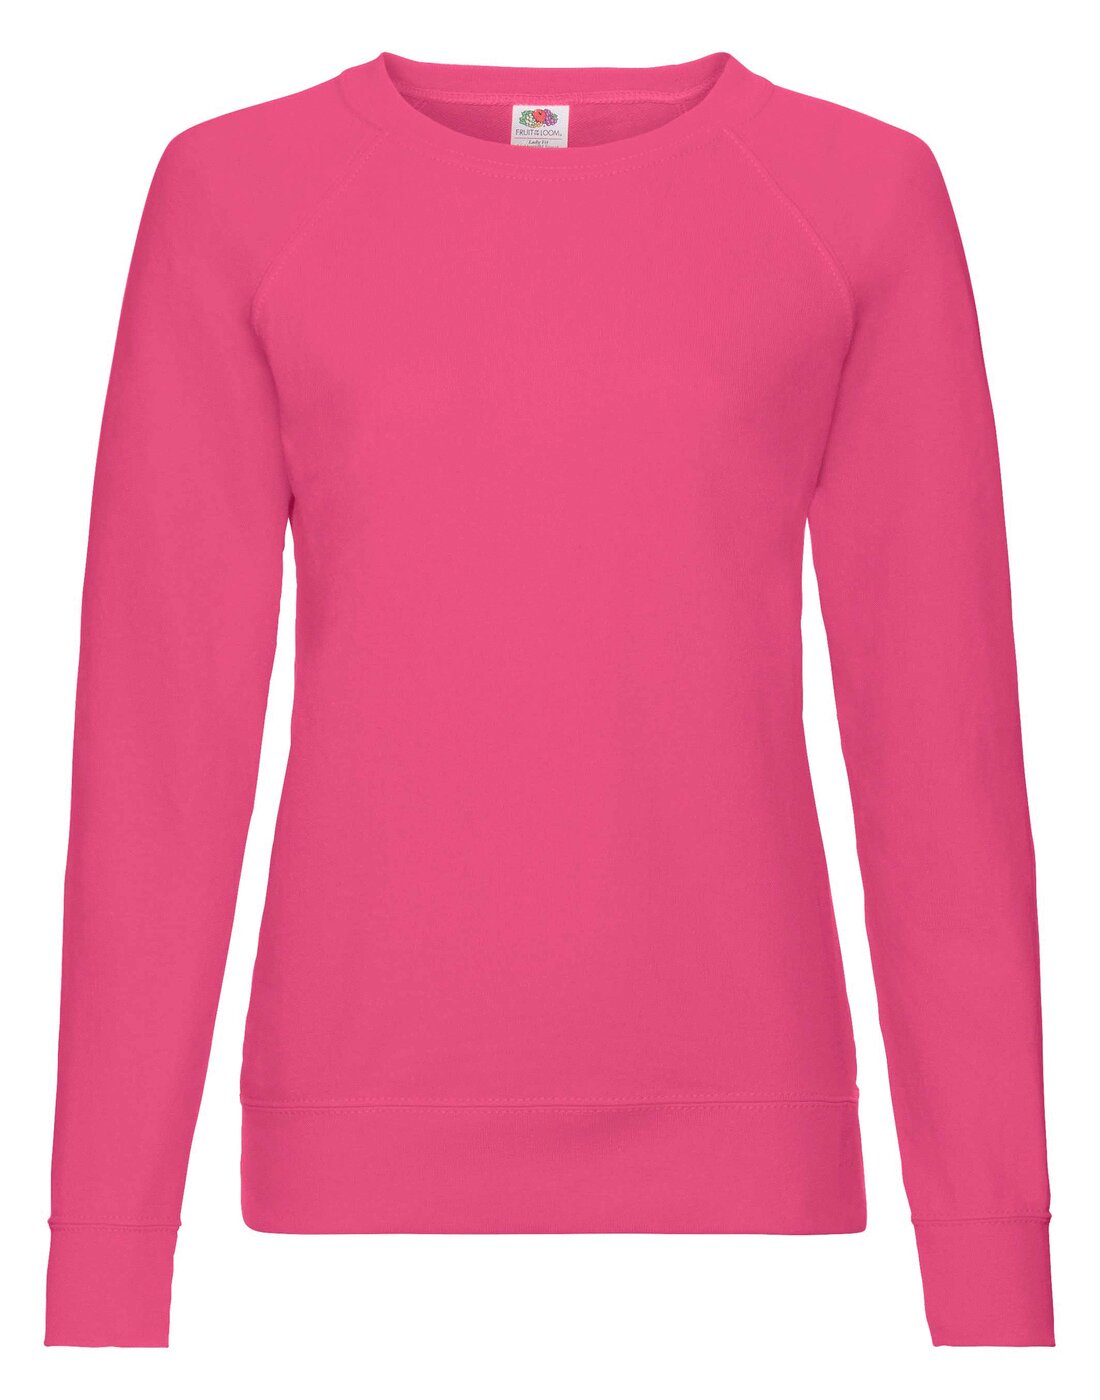 Fruit of the Loom Ladies Lightweight Raglan Sweatshirt - Fuchsia Pink